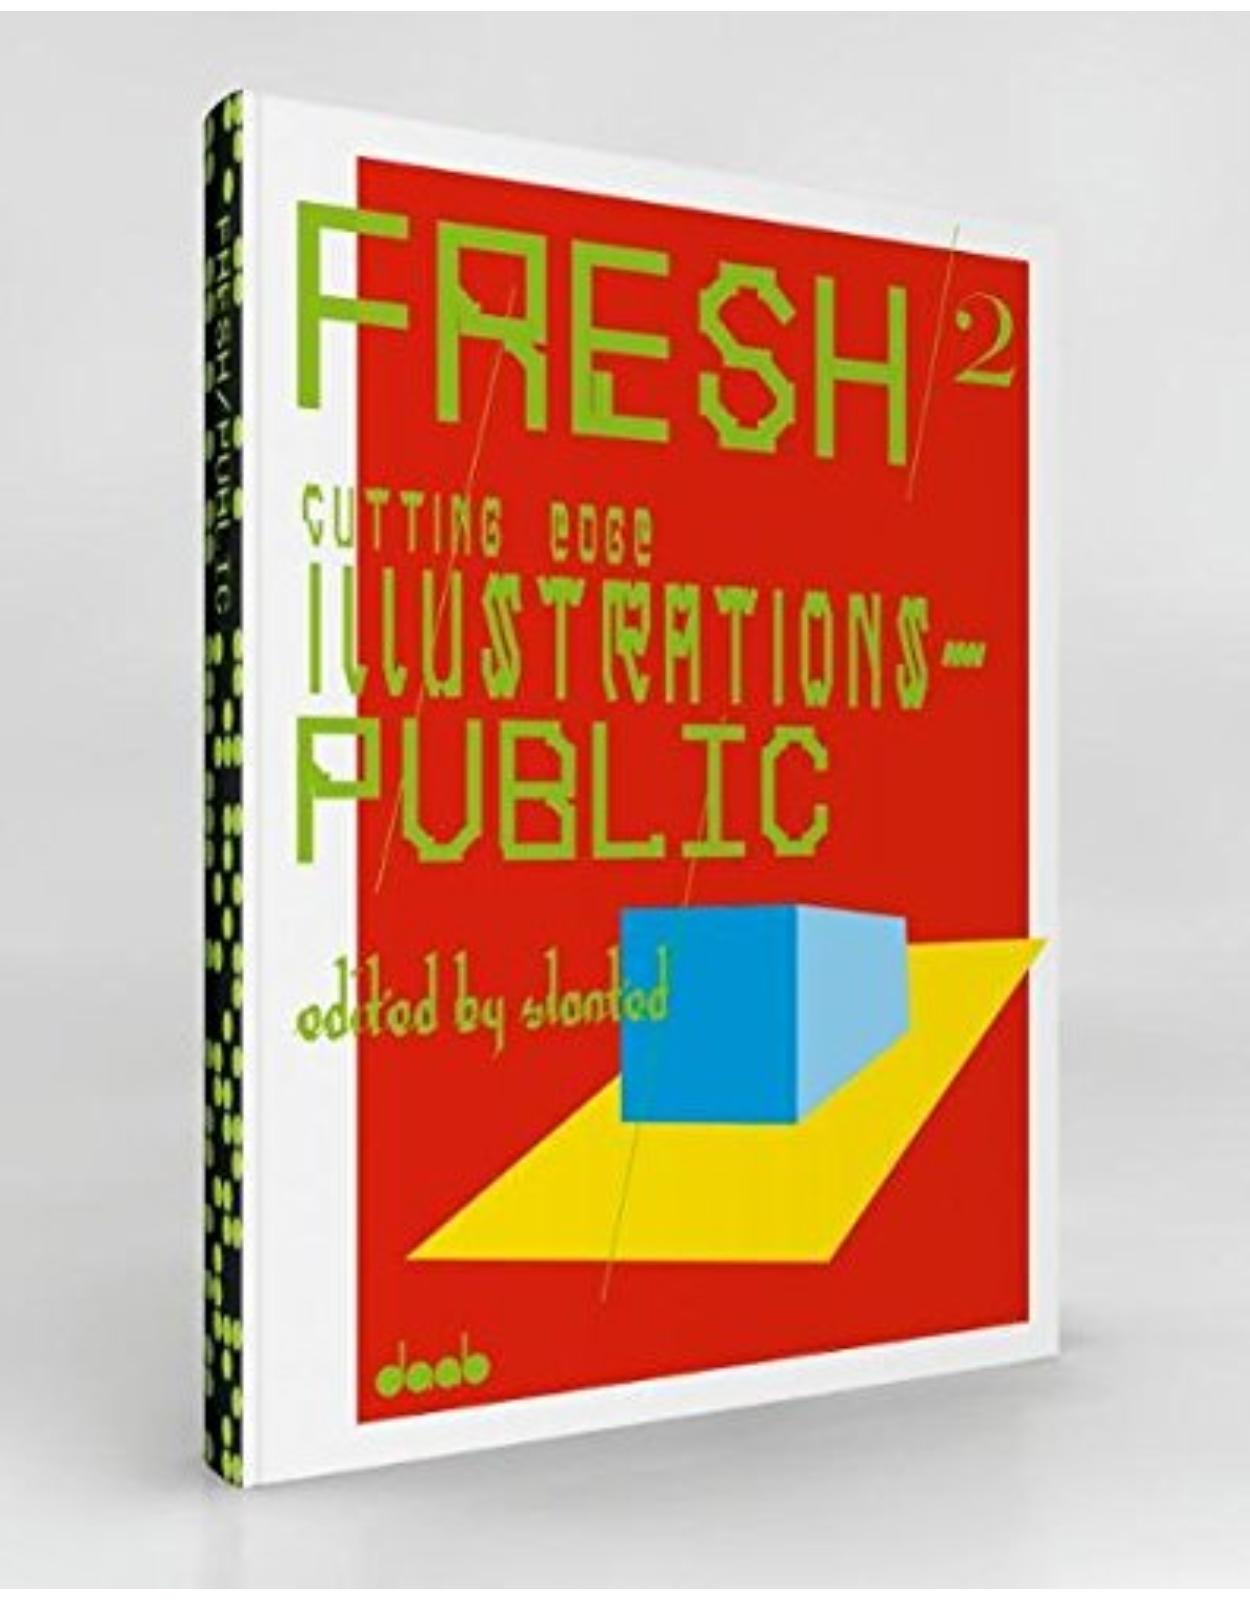 Fresh: Cutting Edge Illustrations in Public, 2